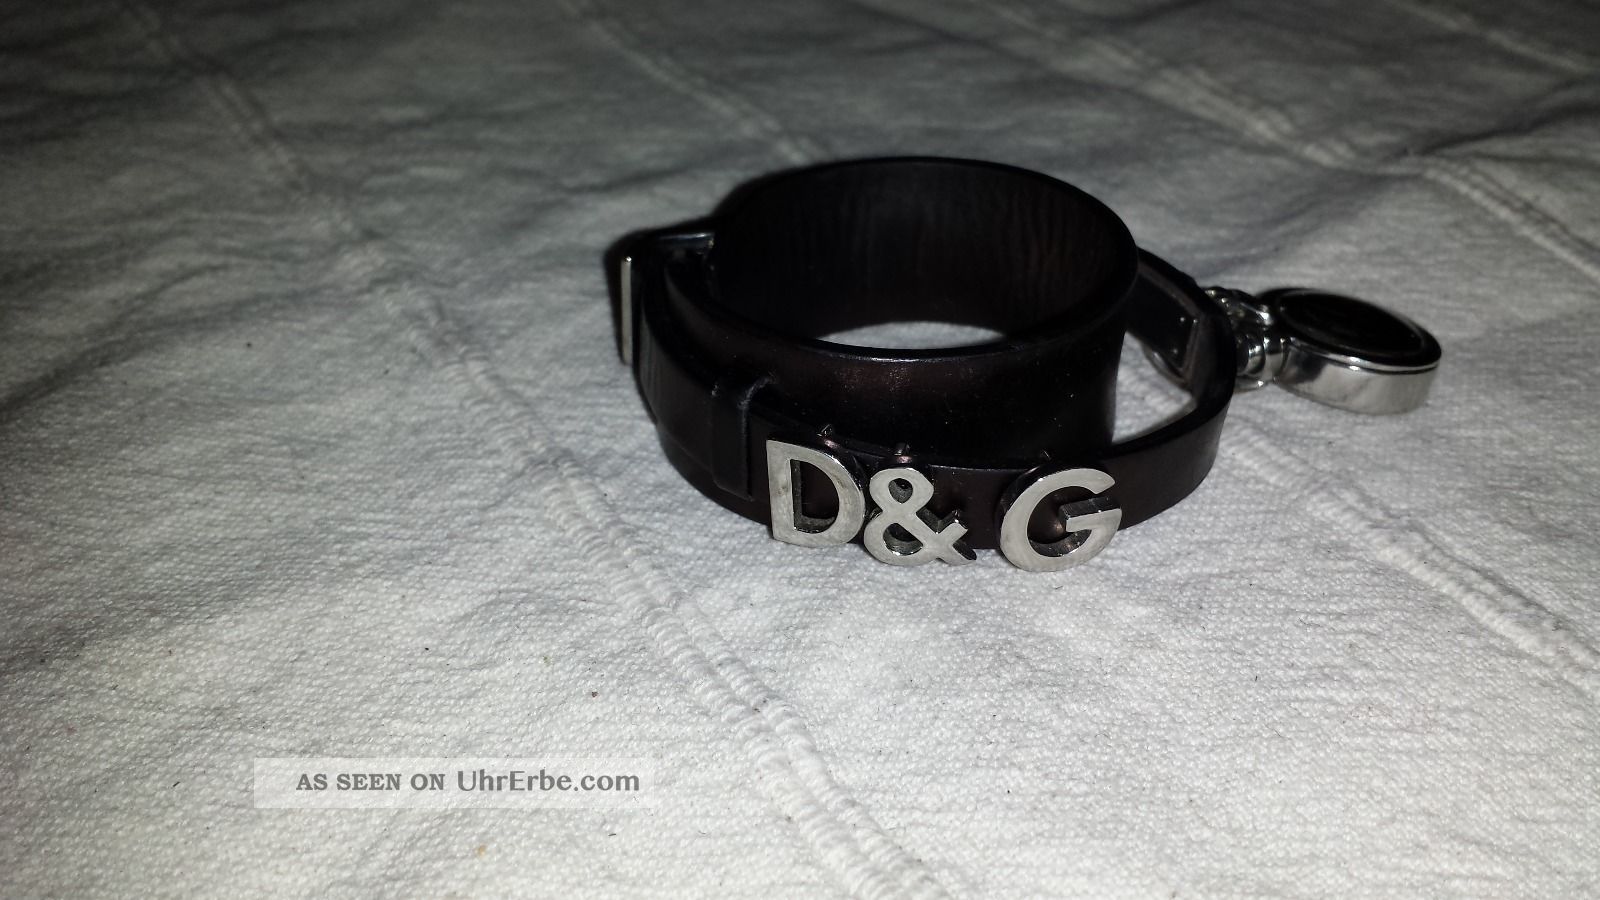 D&g Dolce&gabbana Armband Leder Stahl Mit Kleiner Uhr